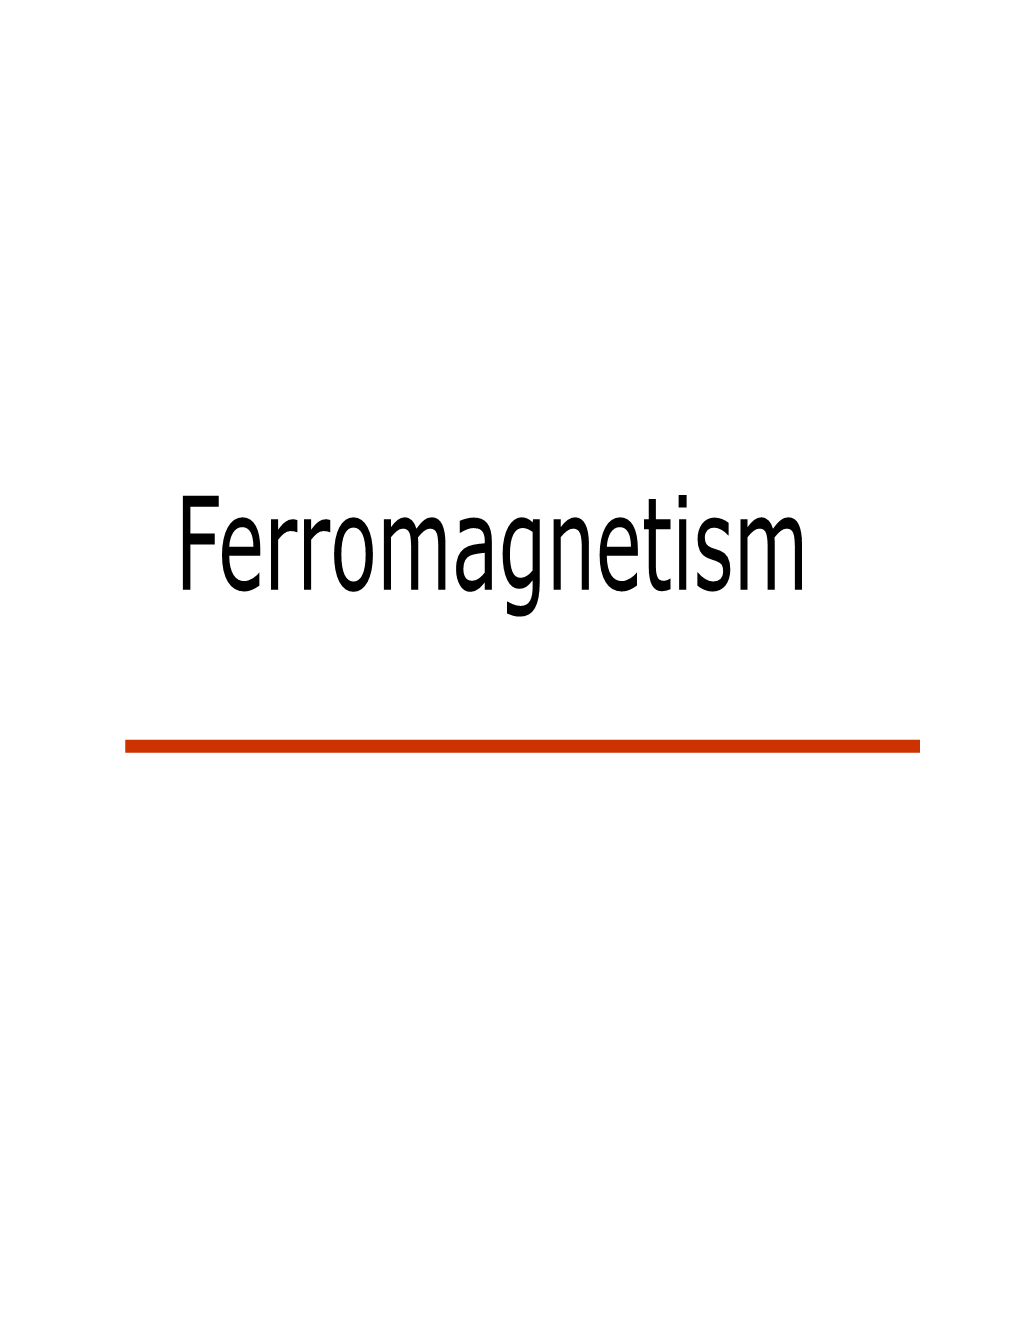 Ferromagnetism Institute of Solid State Physics Technische Universität Graz Ferromagnetism